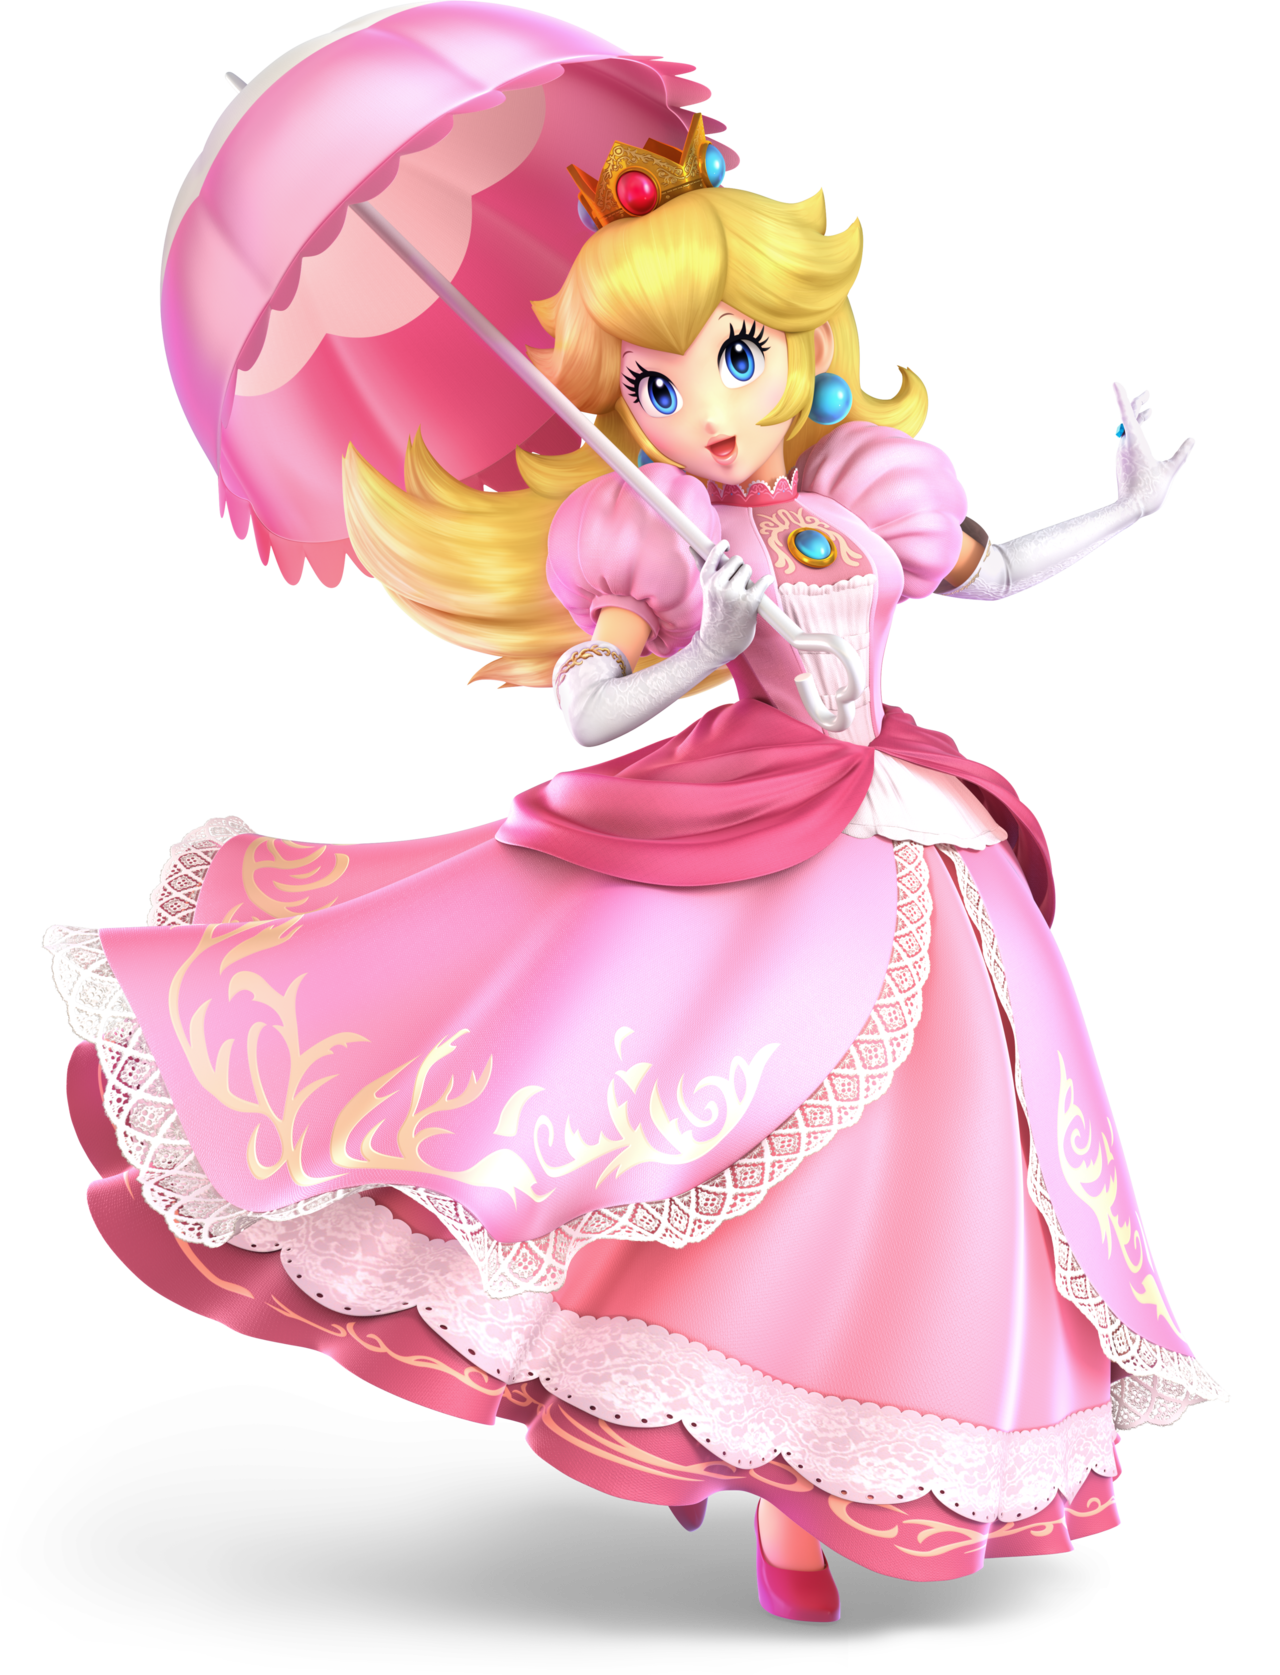 Princess Peach (Super Mario Bros) by Blue-Leader97 on DeviantArt